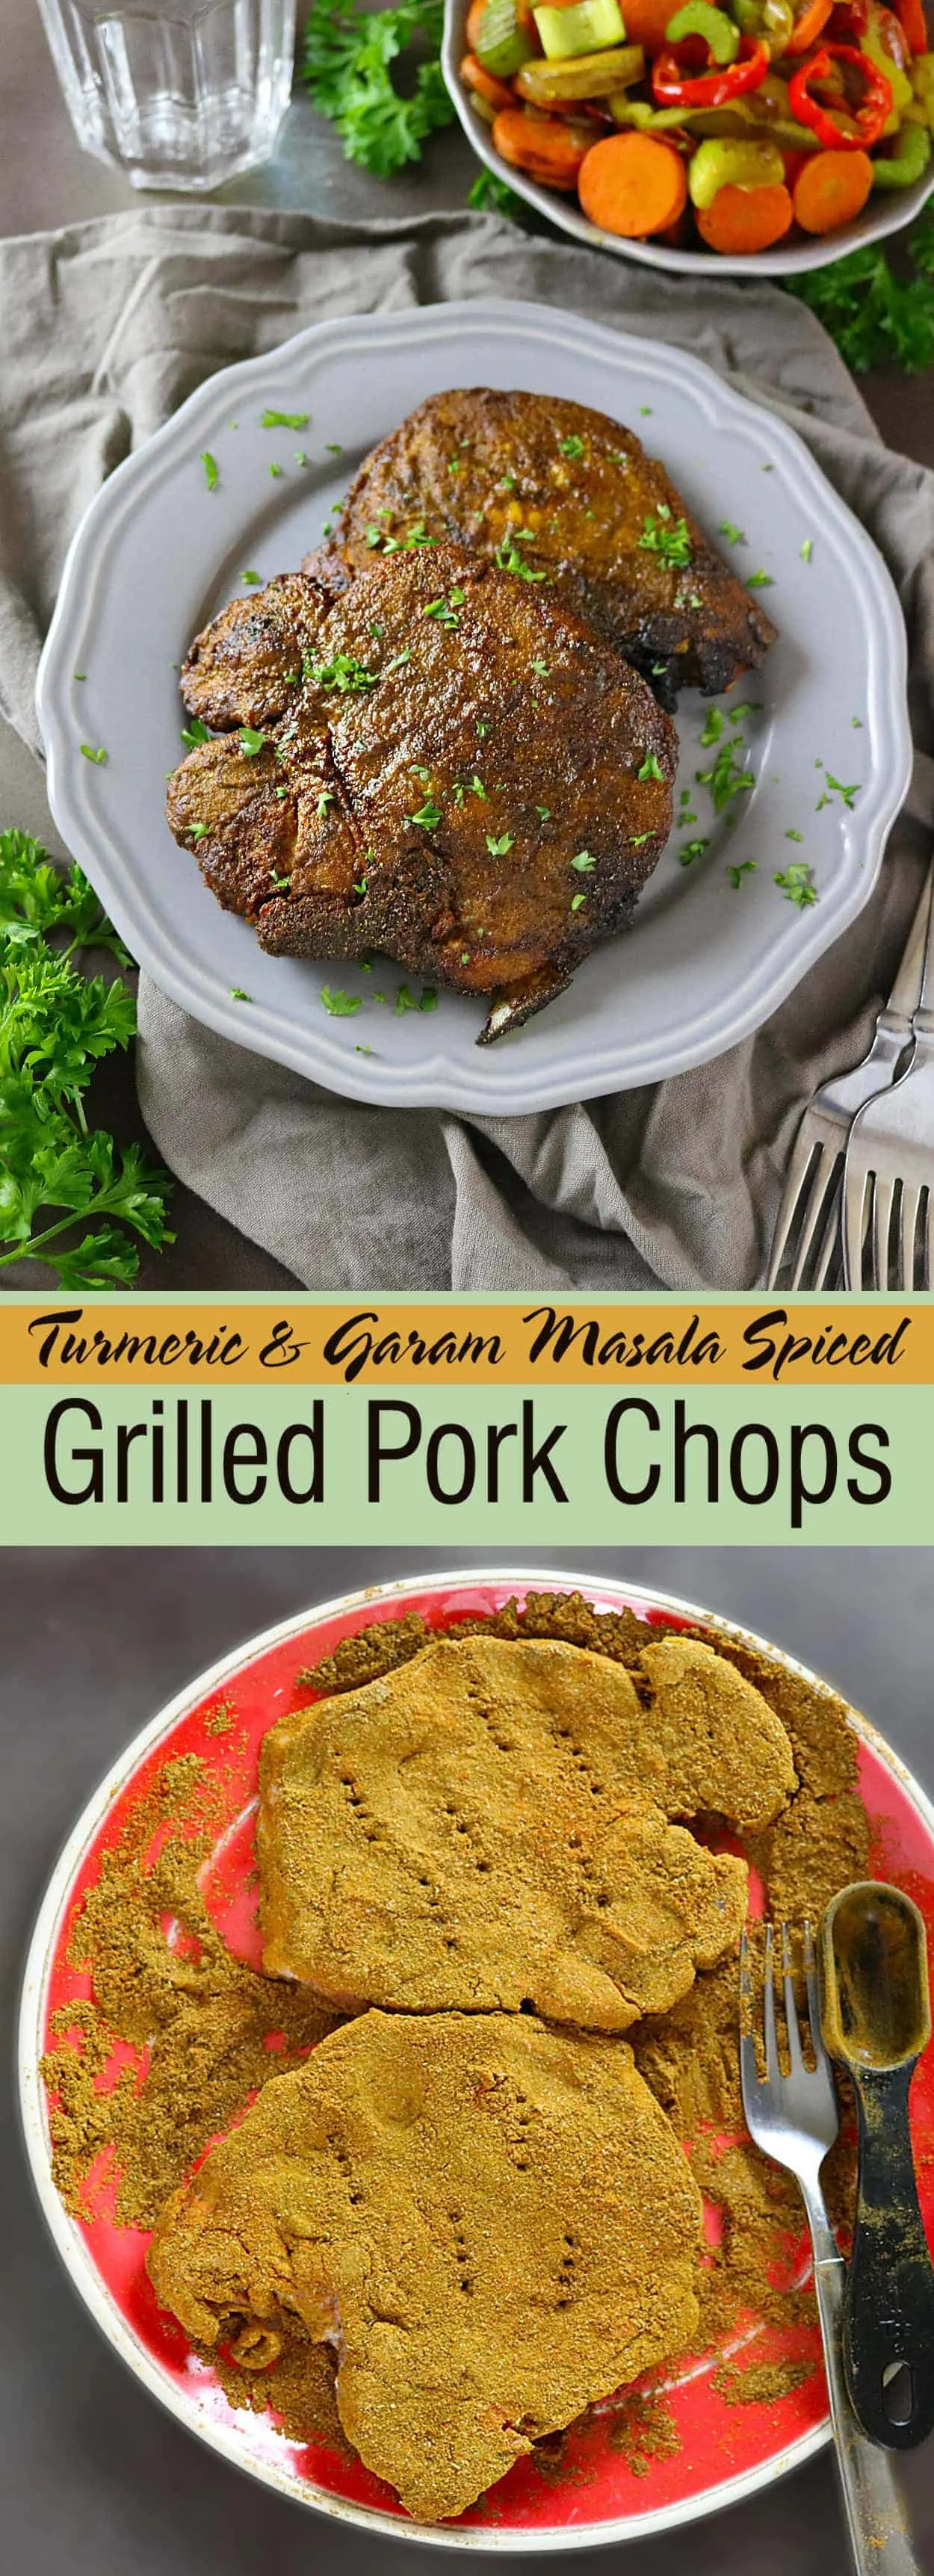 Turmeric & Garam Masala Spiced, Grilled Pork